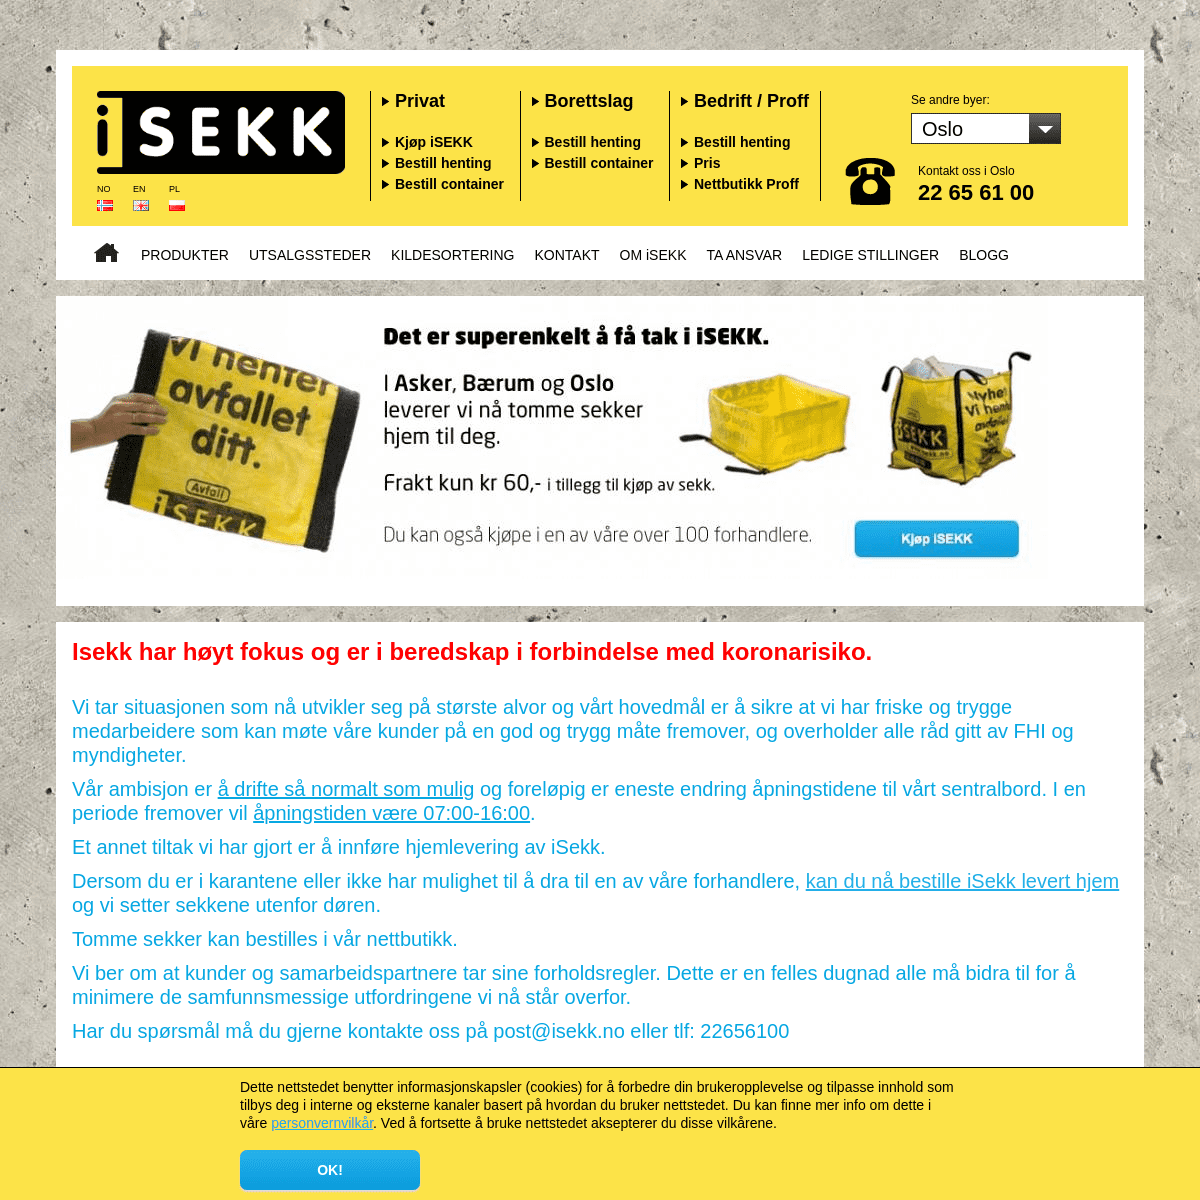 A complete backup of isekk.no